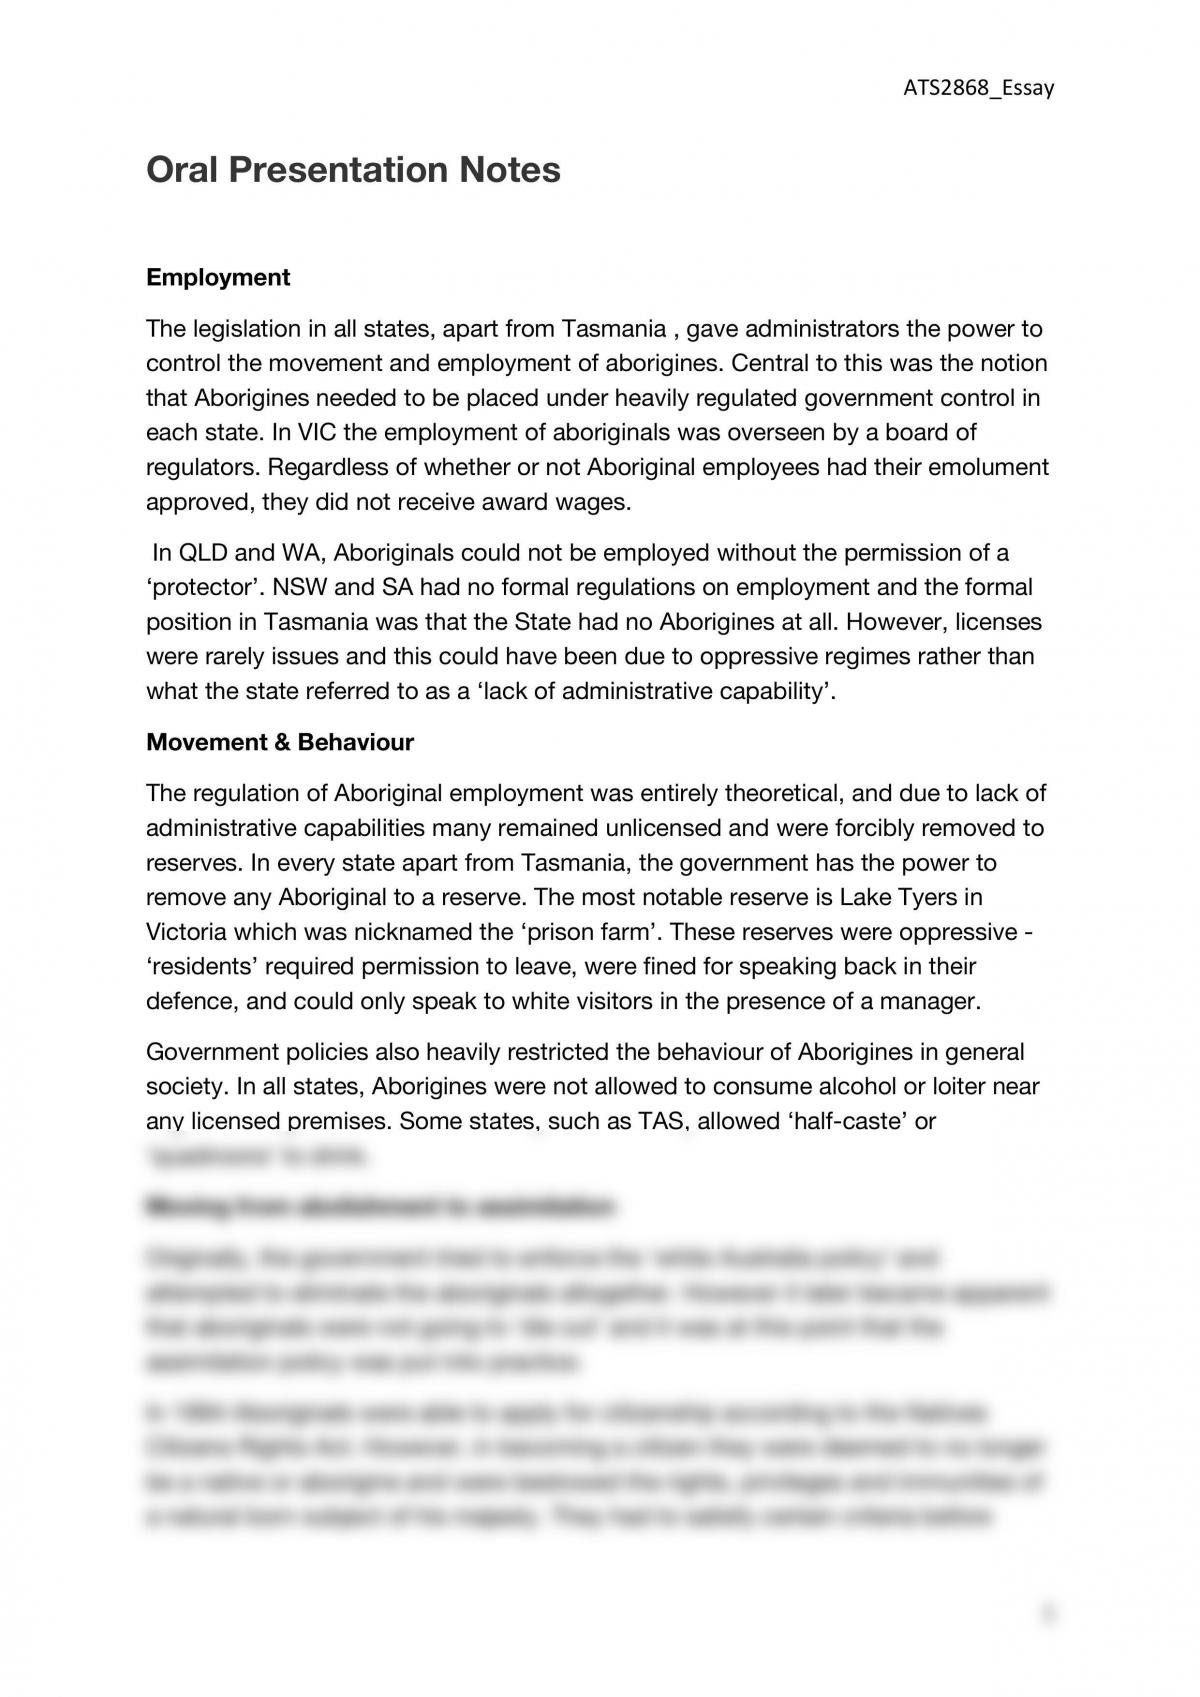 Speech on Restrictive Indigenous Legislation - Page 1